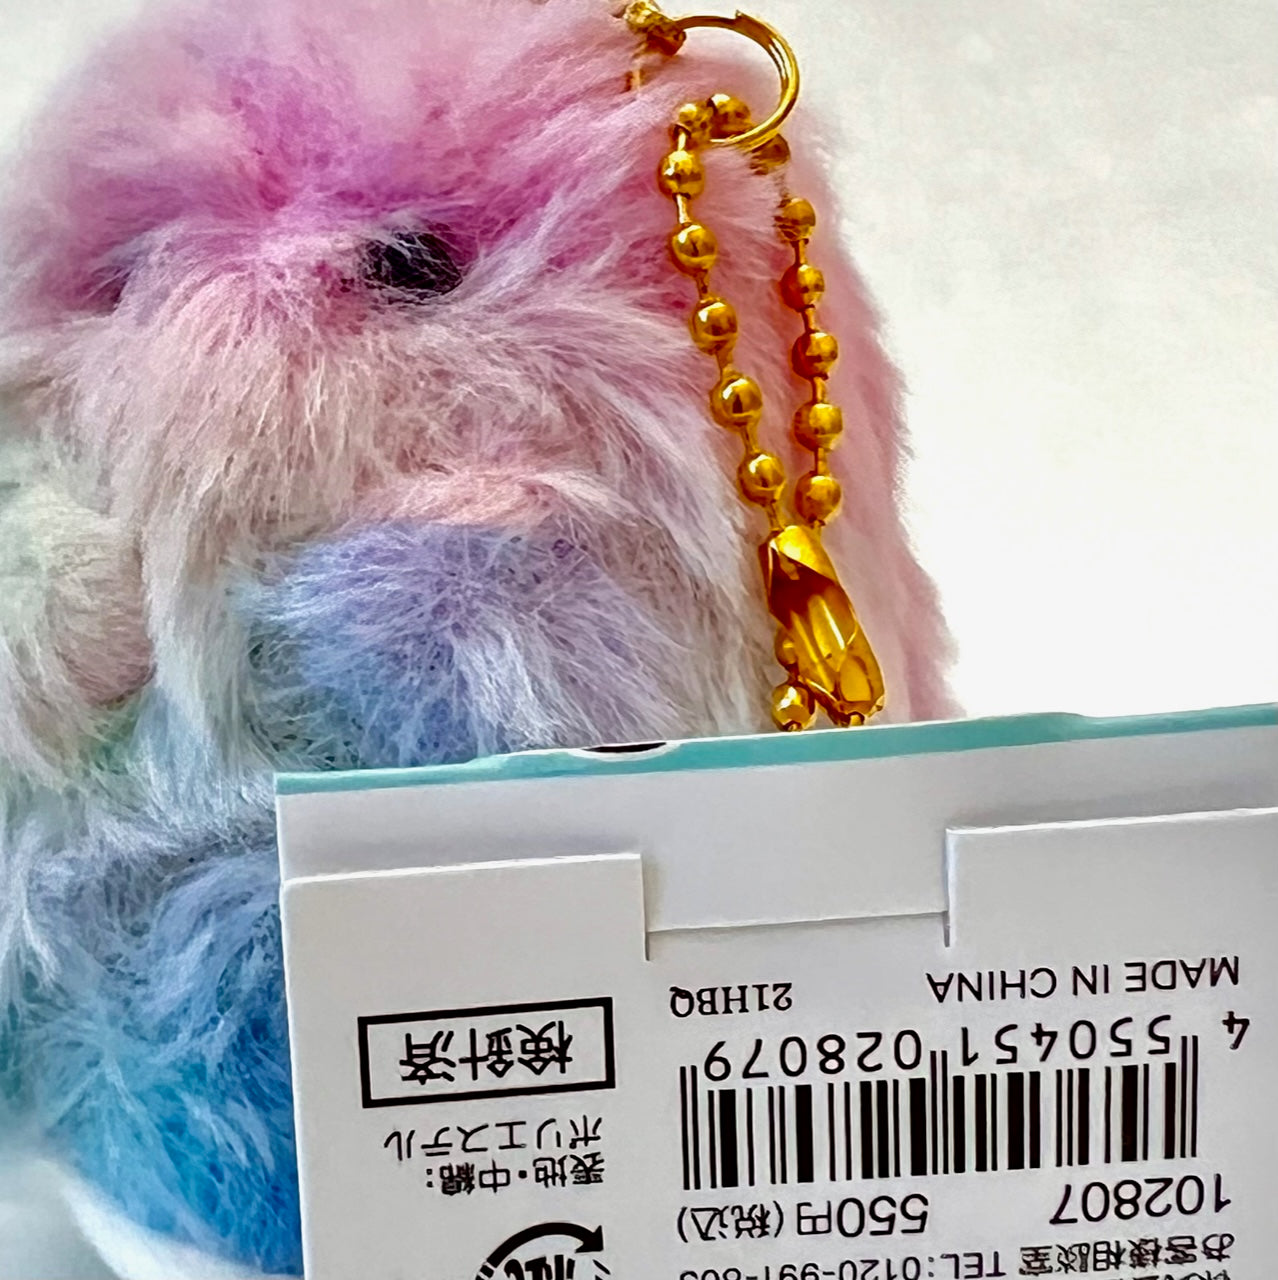 Colorful Rainbow Kawaii Plush Rabbit Keychain Rabbit Doll Furry